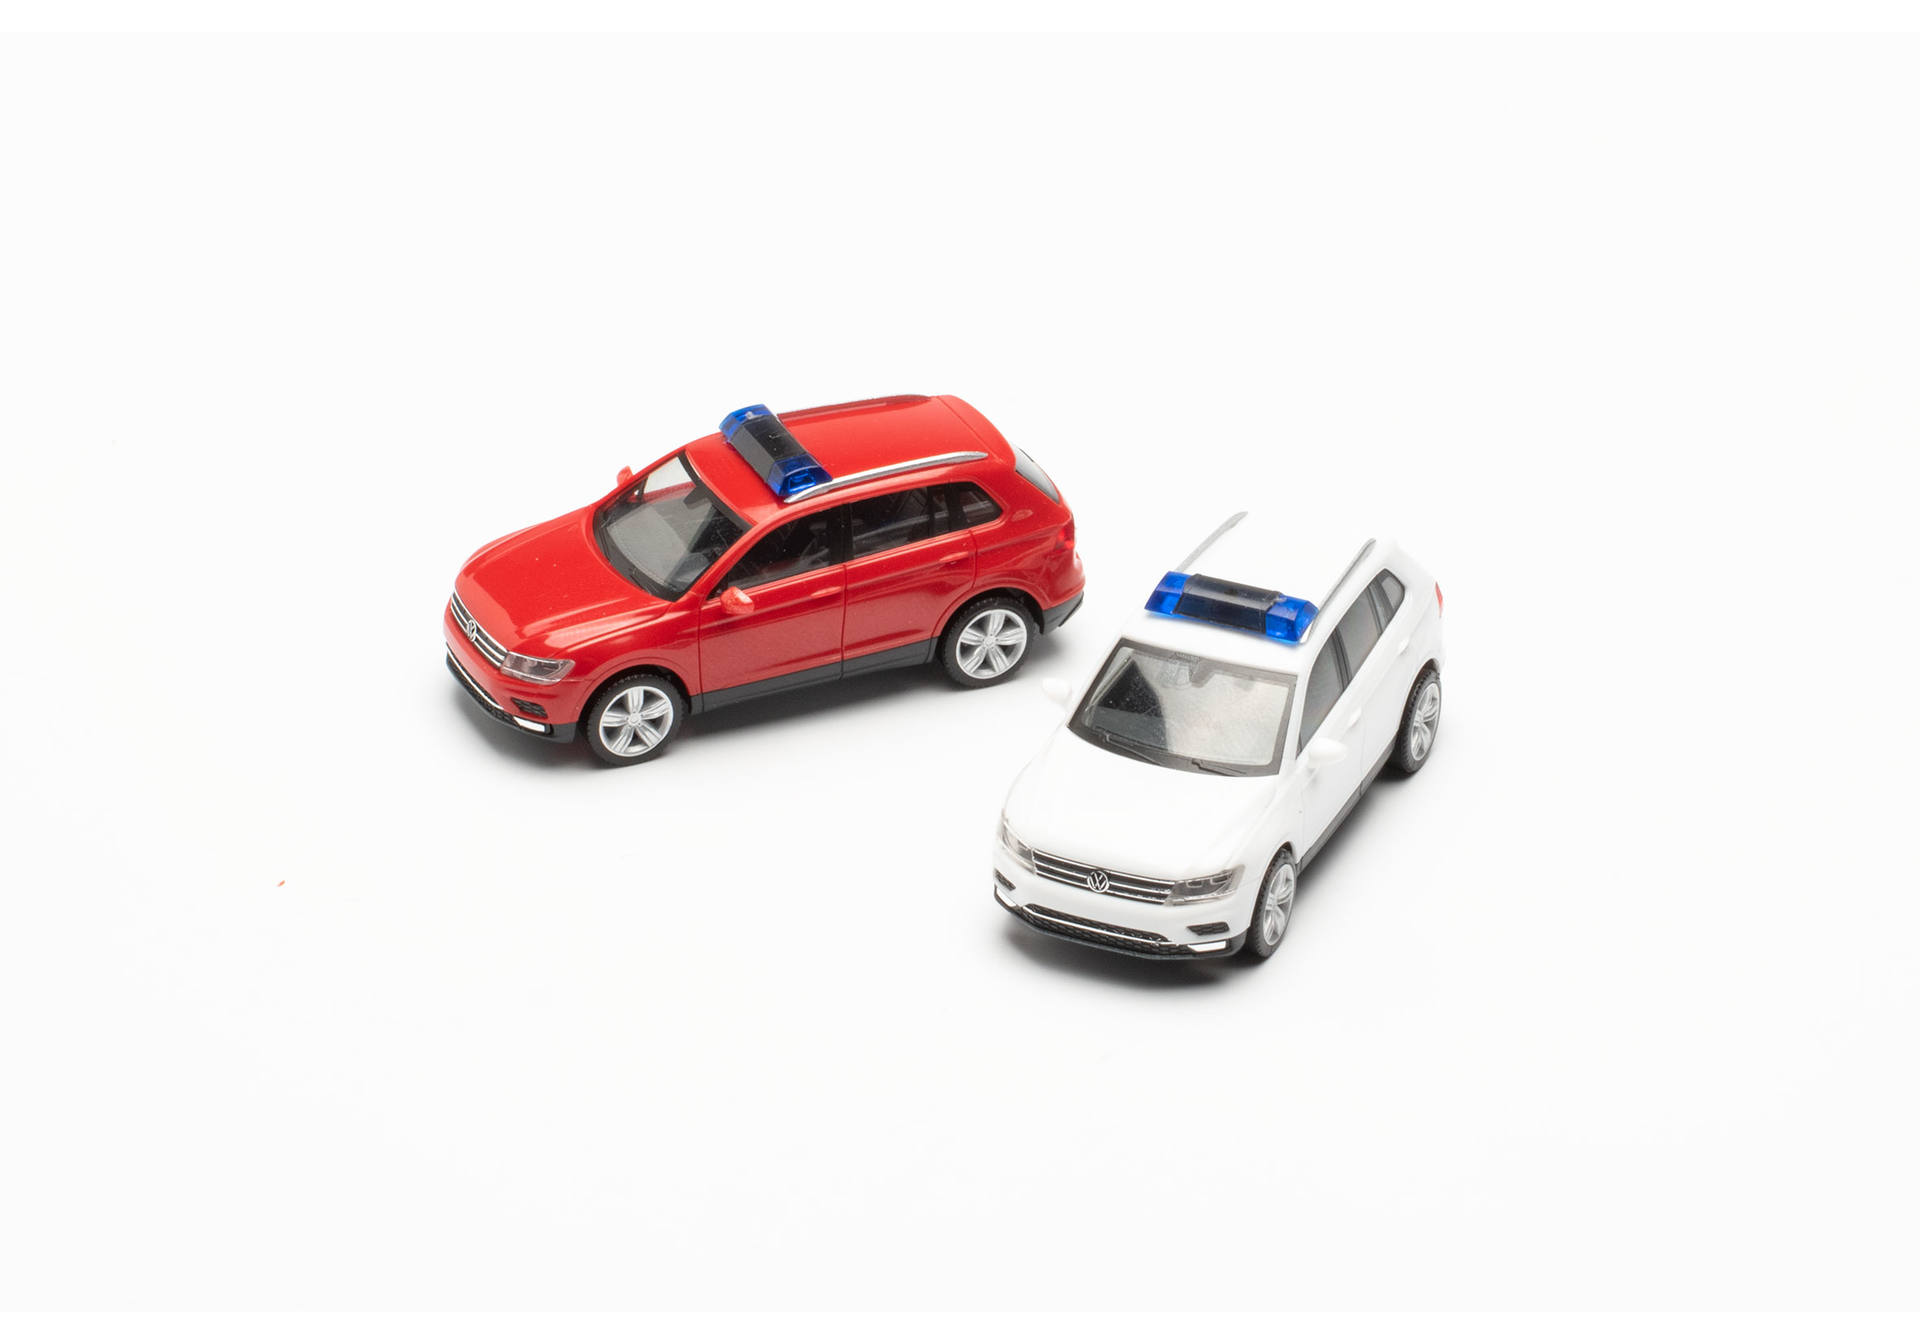 Herpa MiniKit: Volkswagen (VW) Tiguan with warning light bar (2 models)